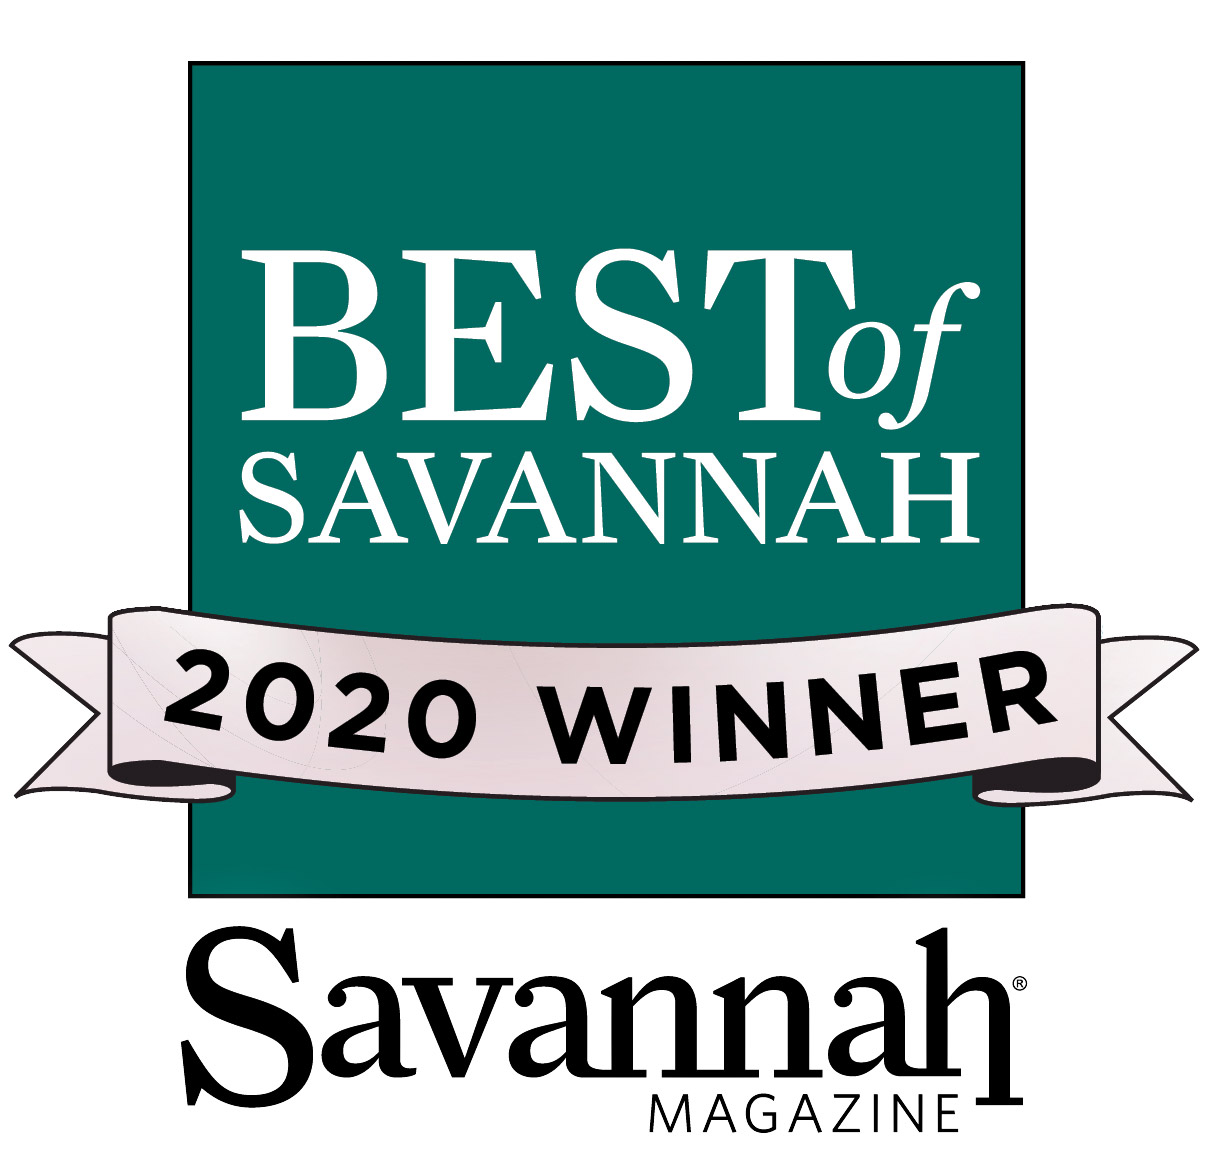 Best of Savannah 2020 award winner